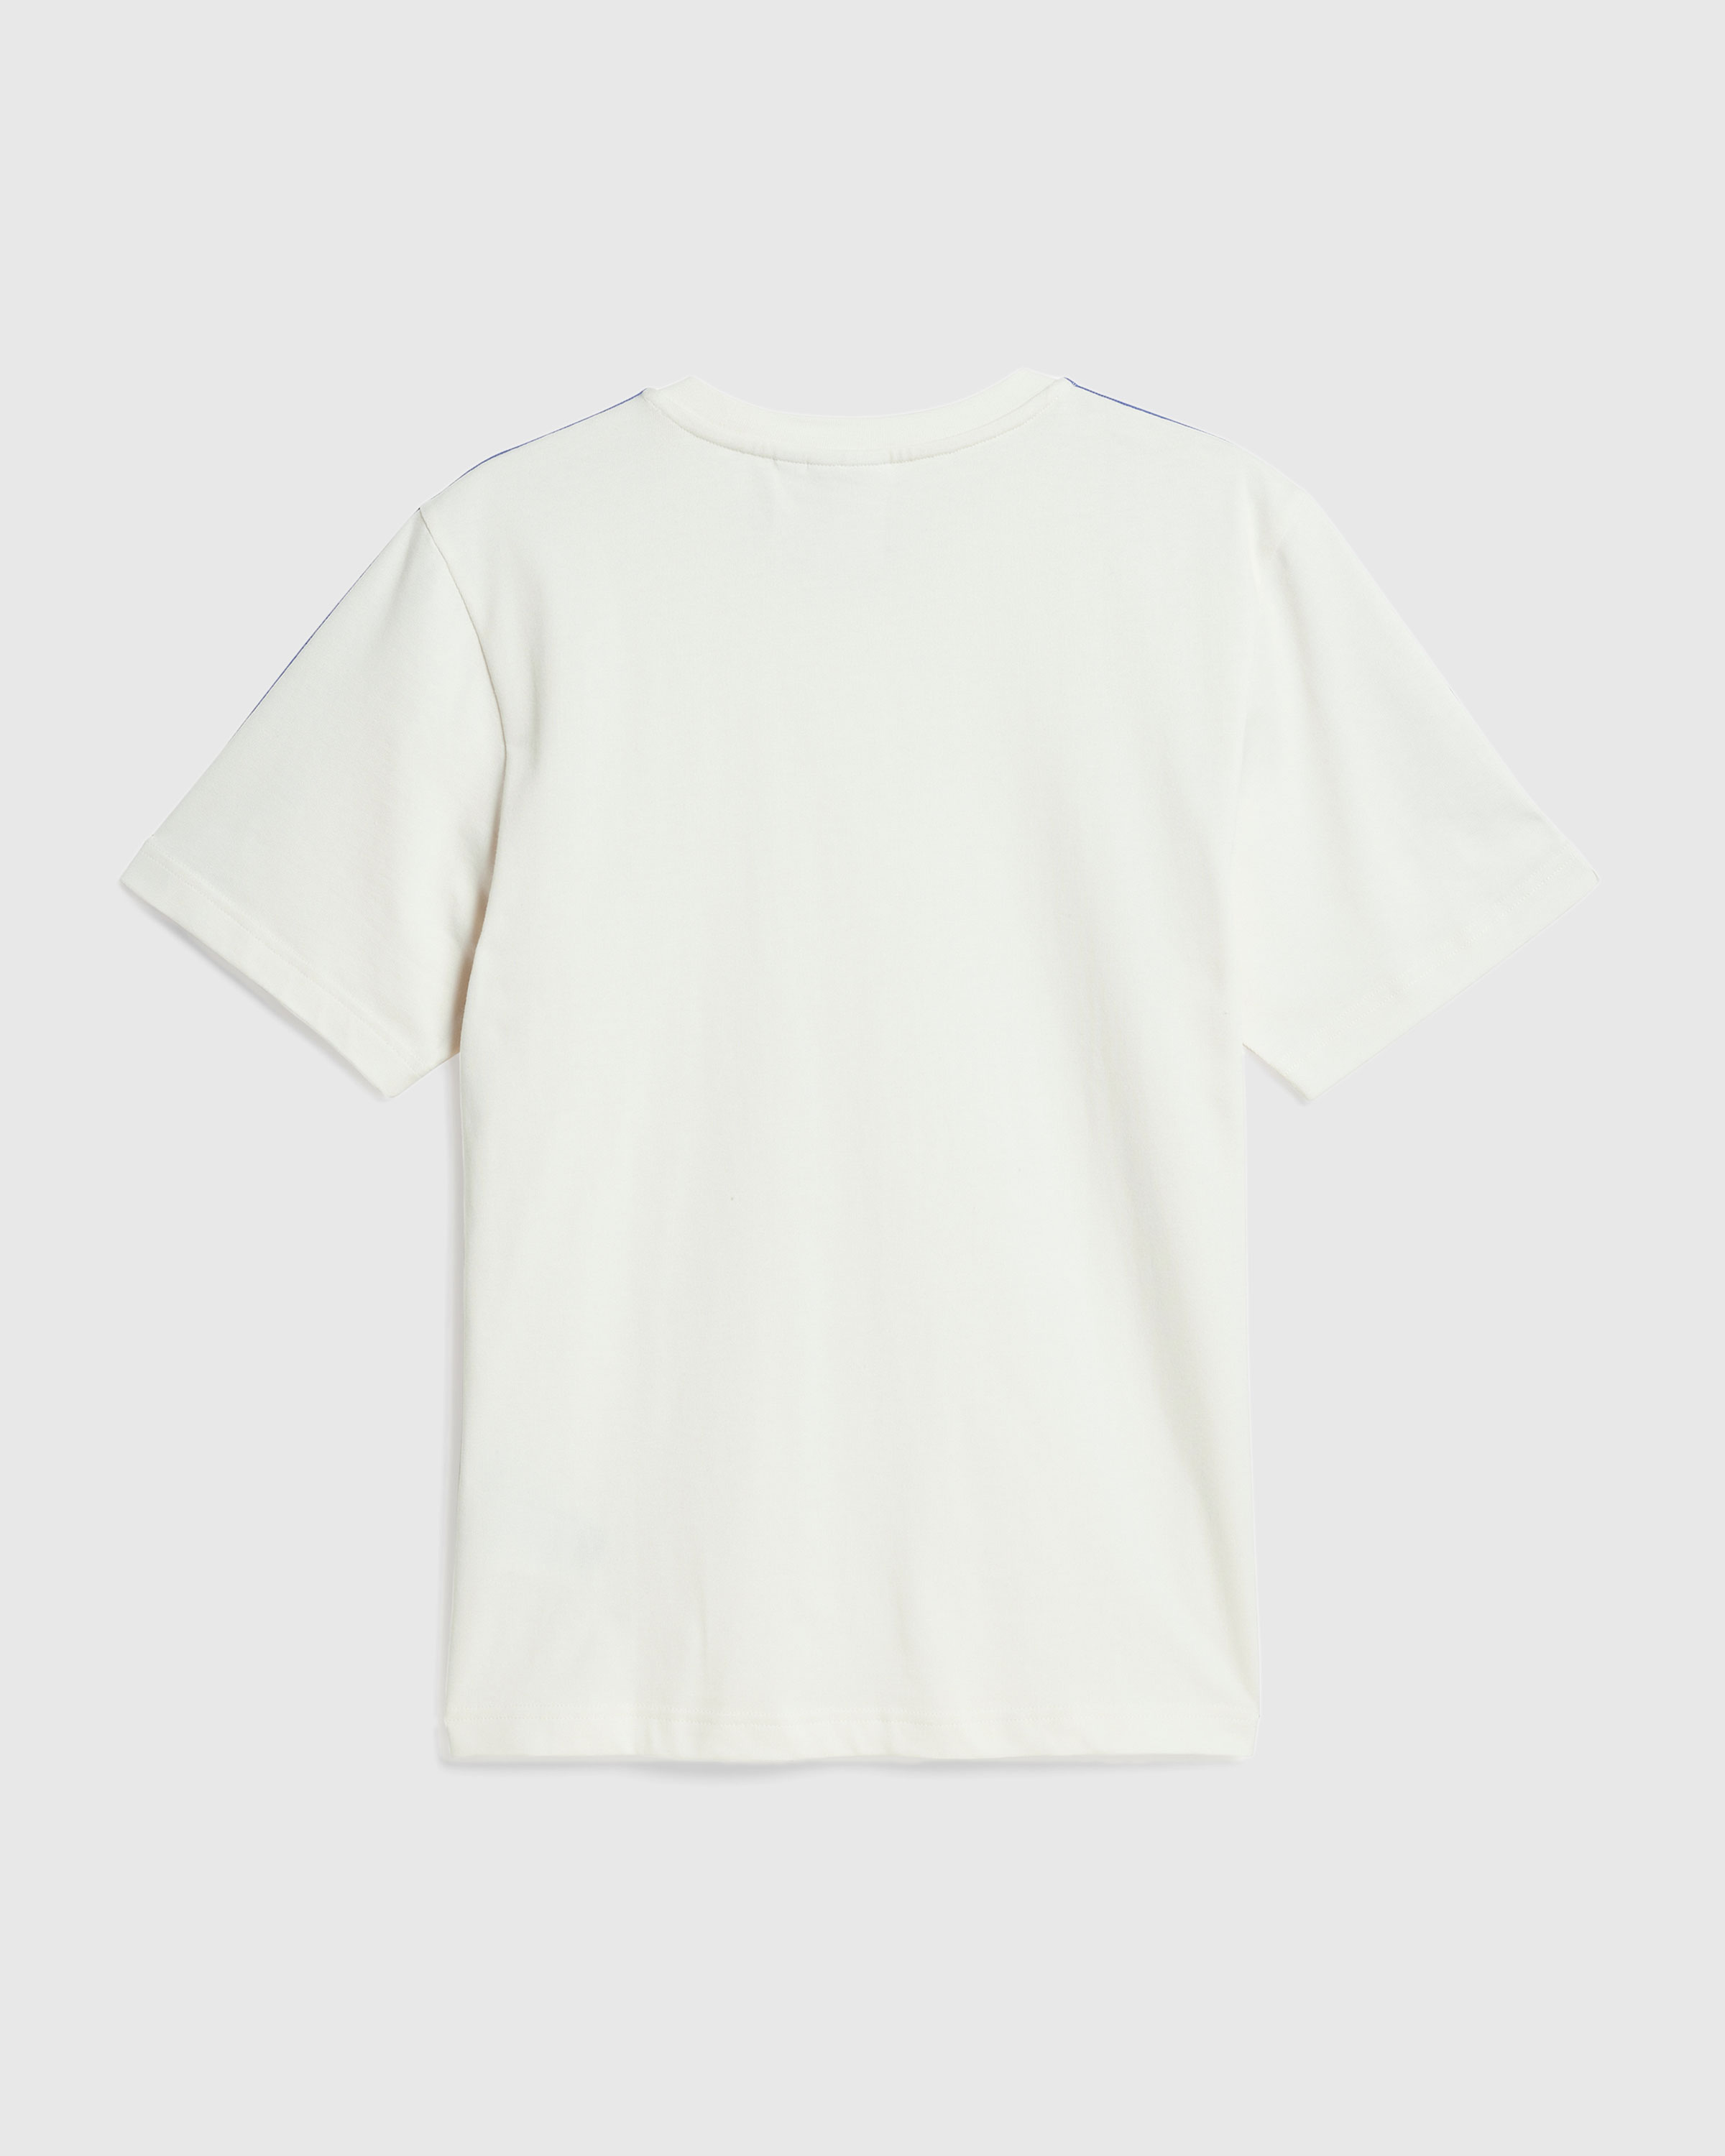 Adidas x Wales Bonner – Short-Sleeve Tee Chalk White - T-Shirts - White - Image 4